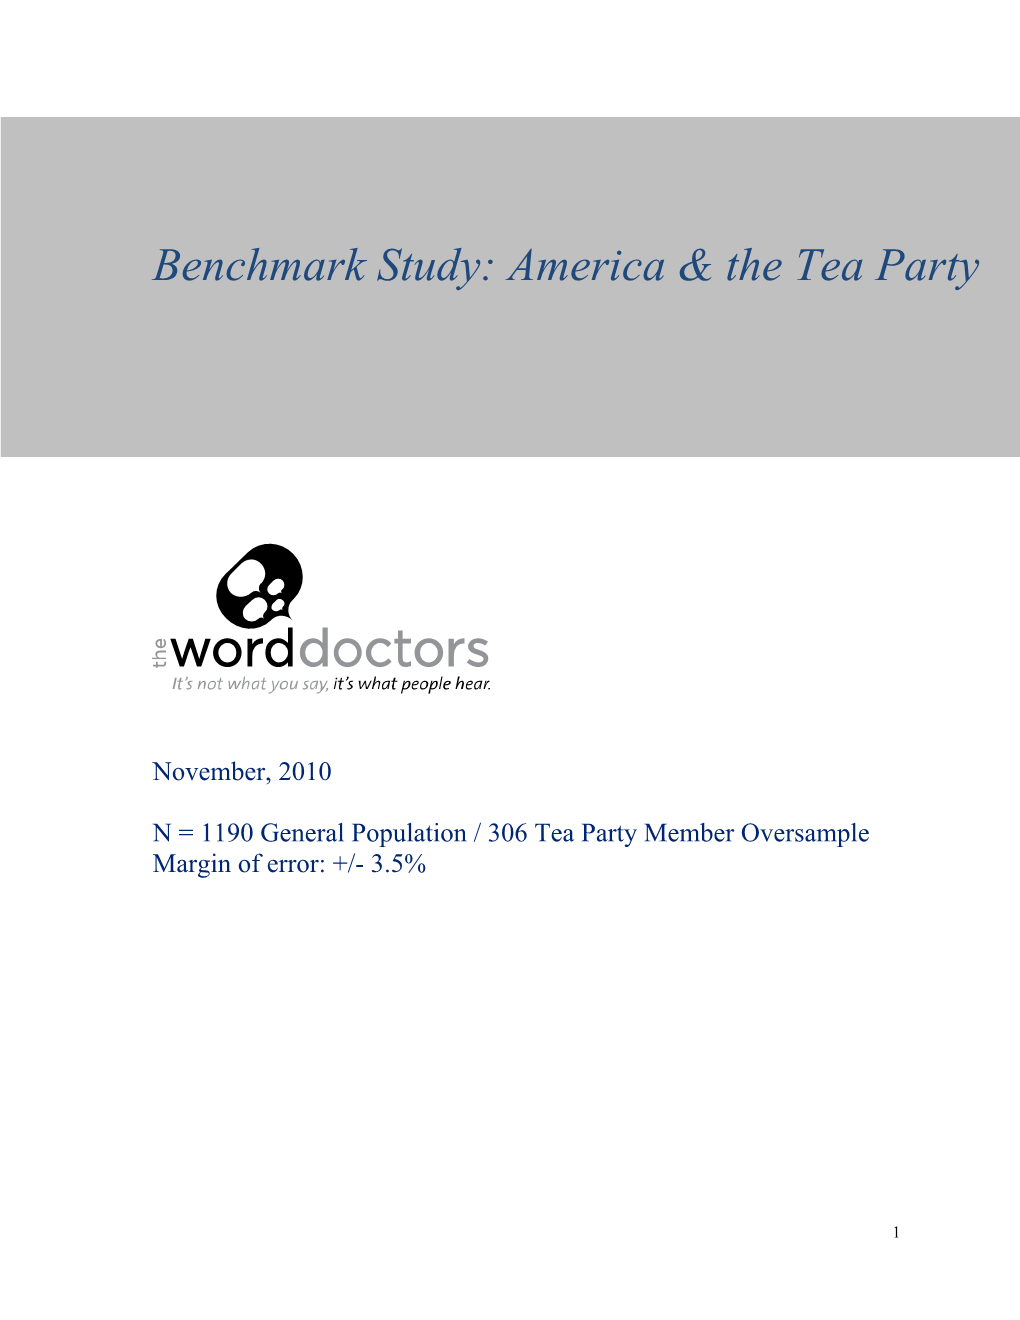 America & the Tea Party